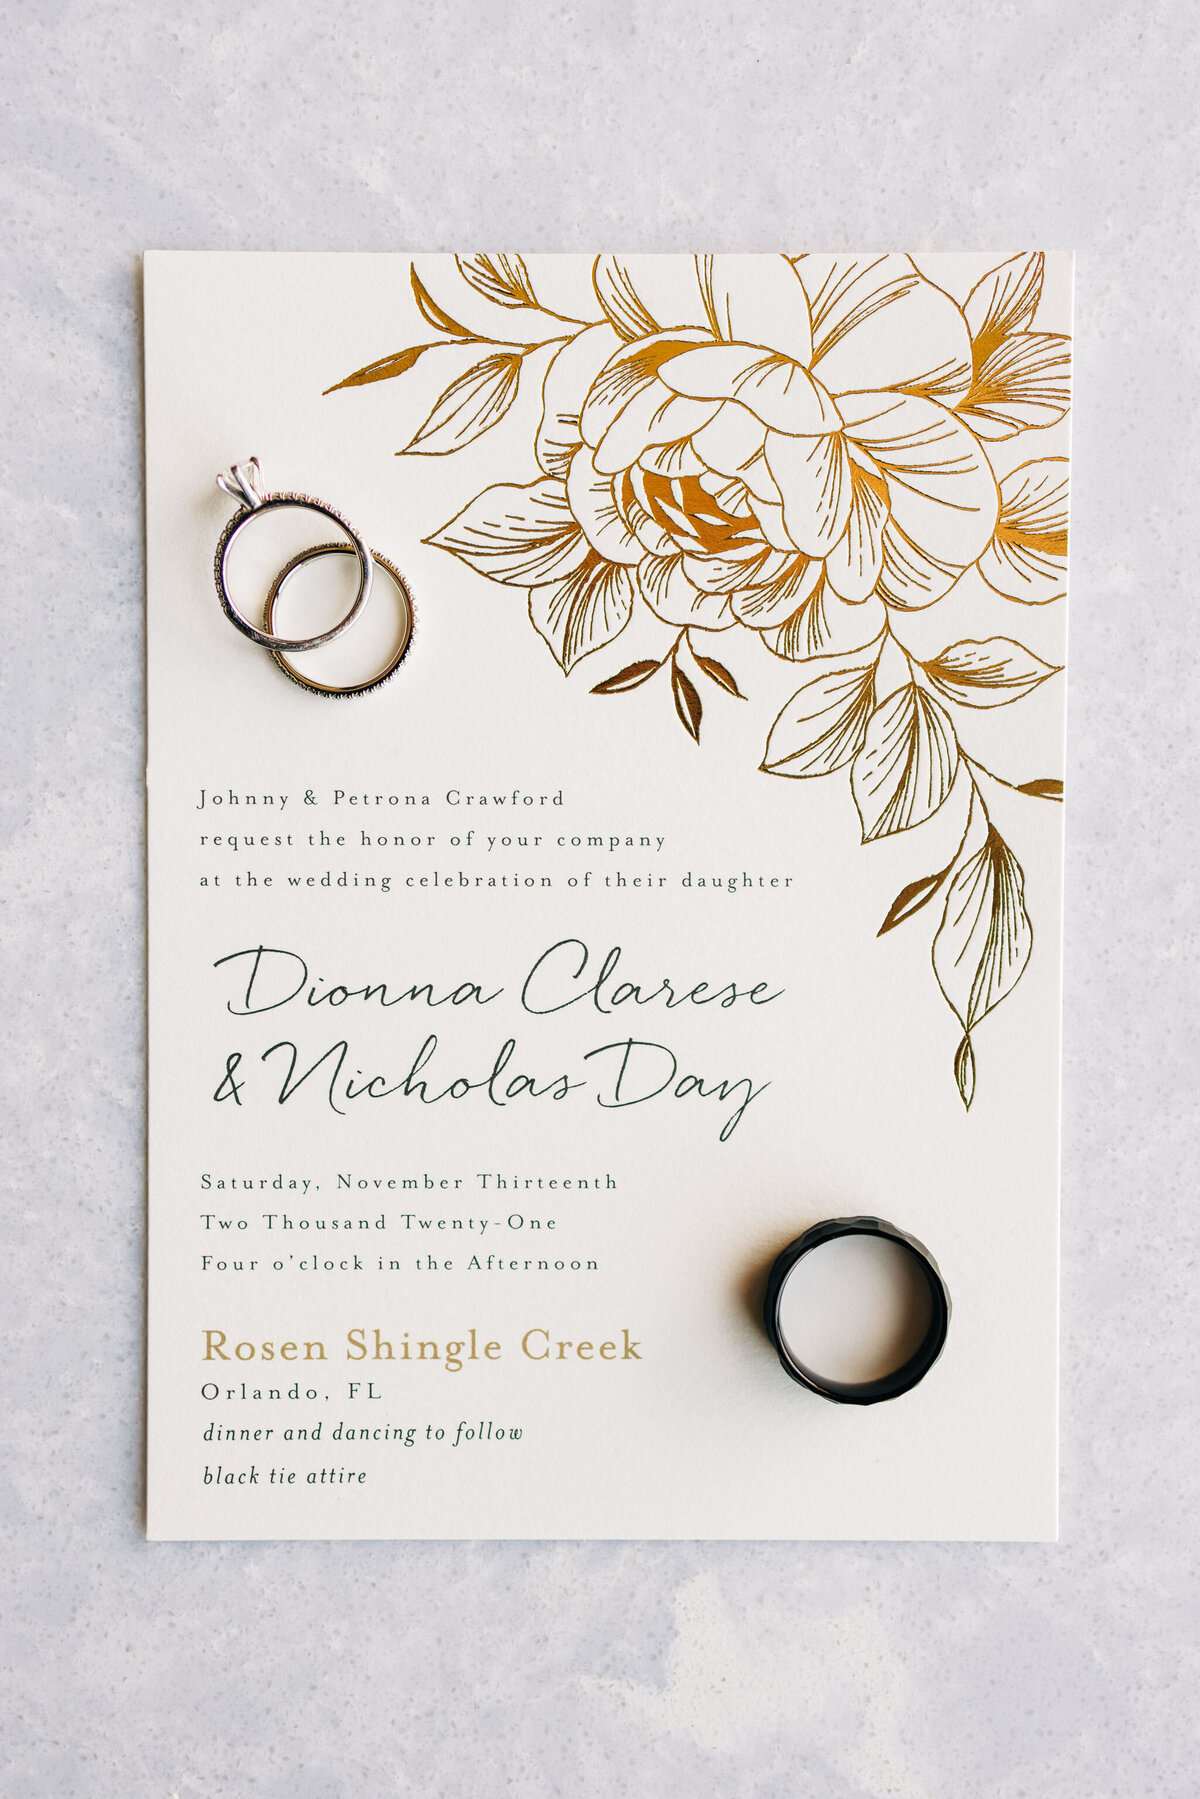 L3 events-orlando wedding planner-rosen shingle creek (20)